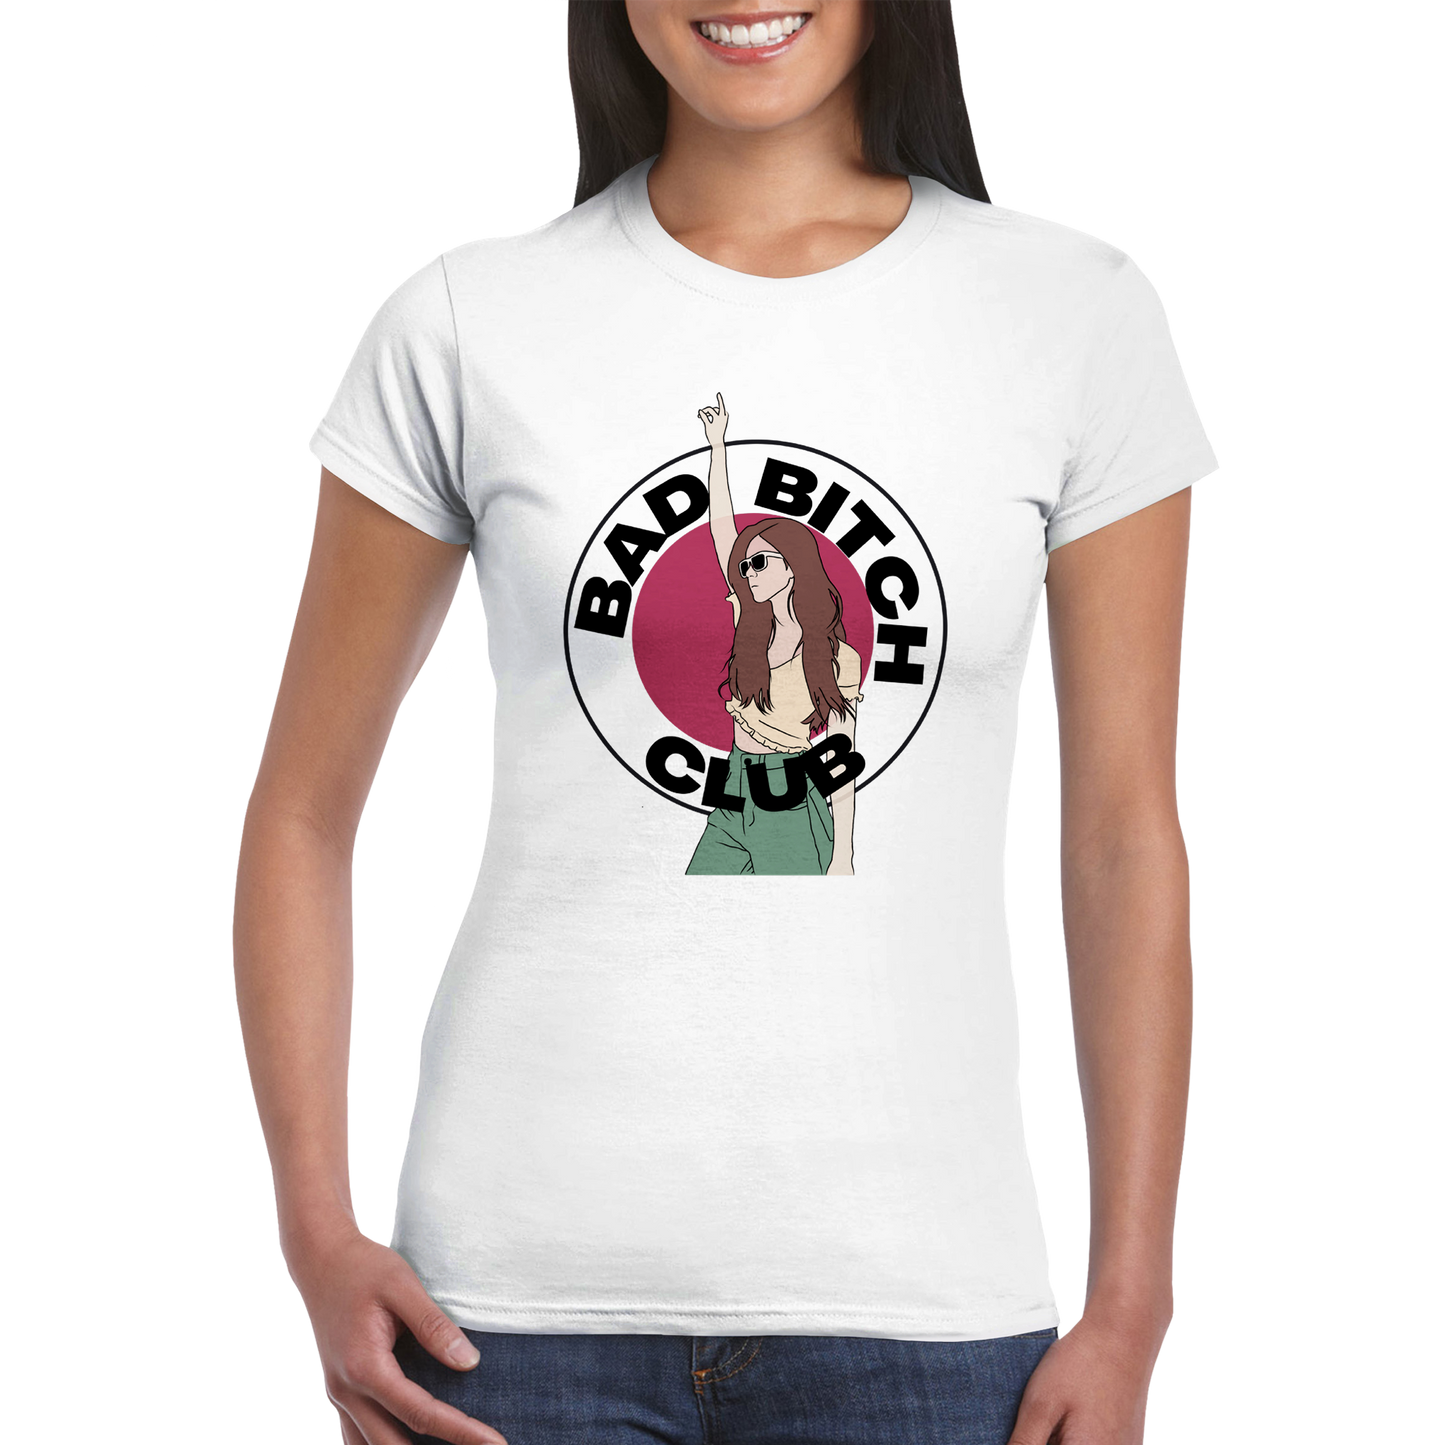 Bad Bitch Club - Classic Womens Crewneck T-shirt